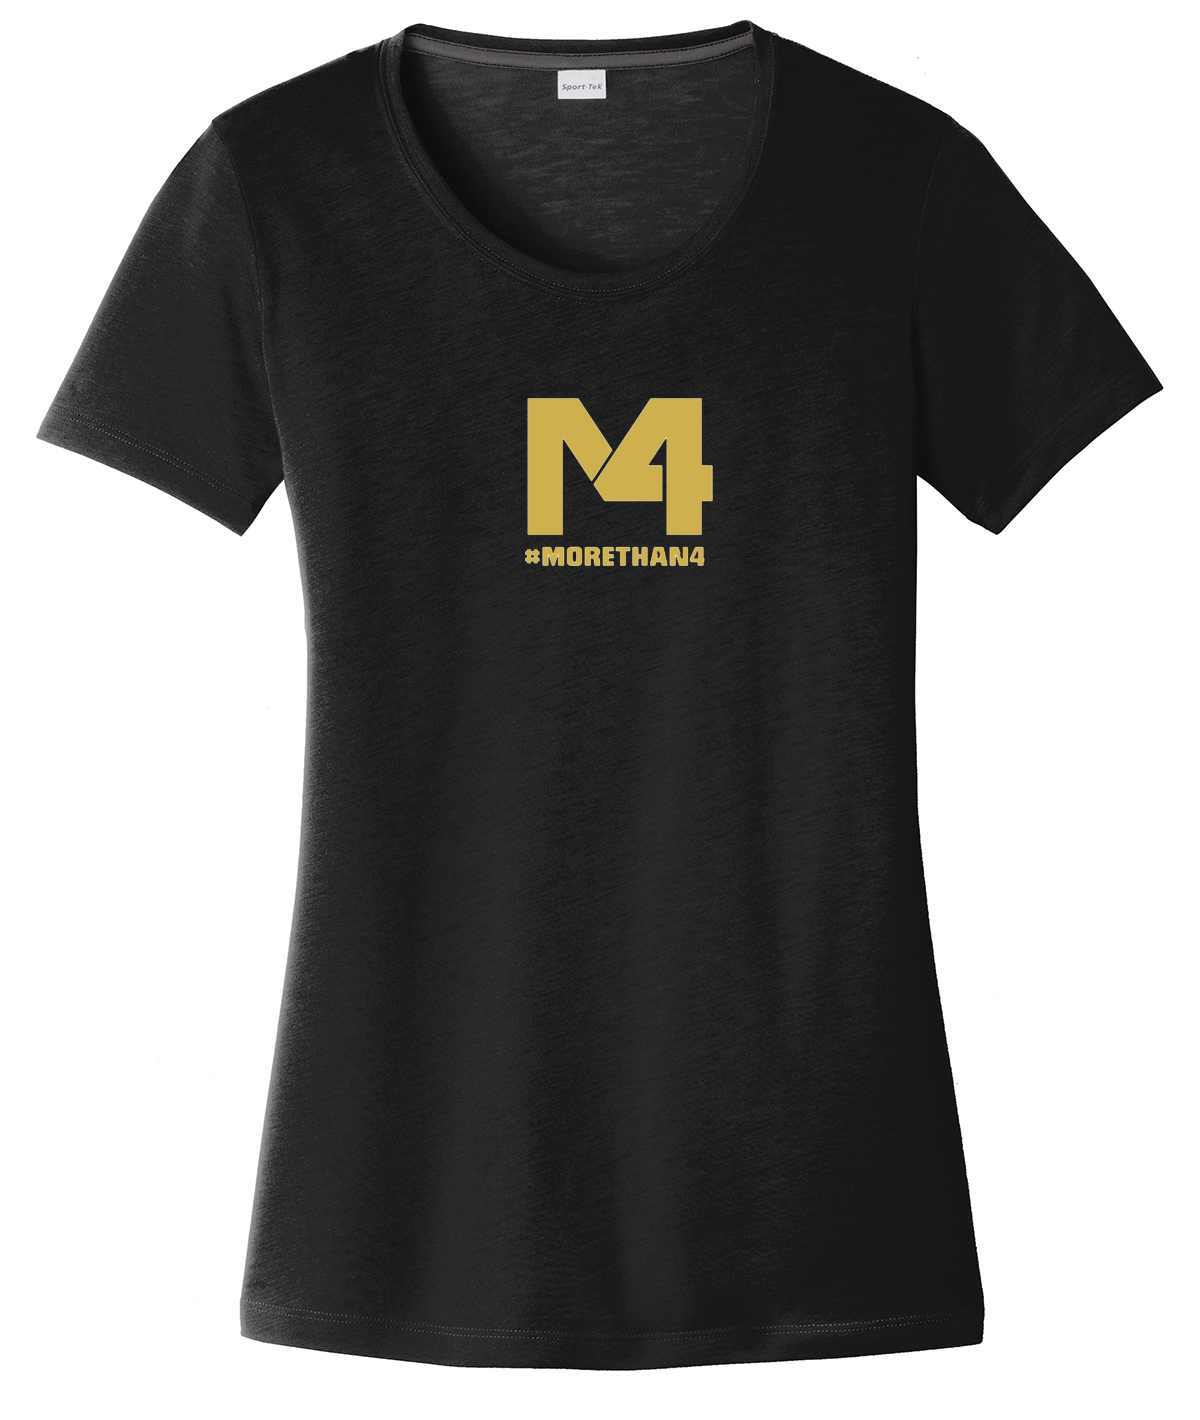 #MORETHAN4 Women's CottonTouch Performance T-Shirt